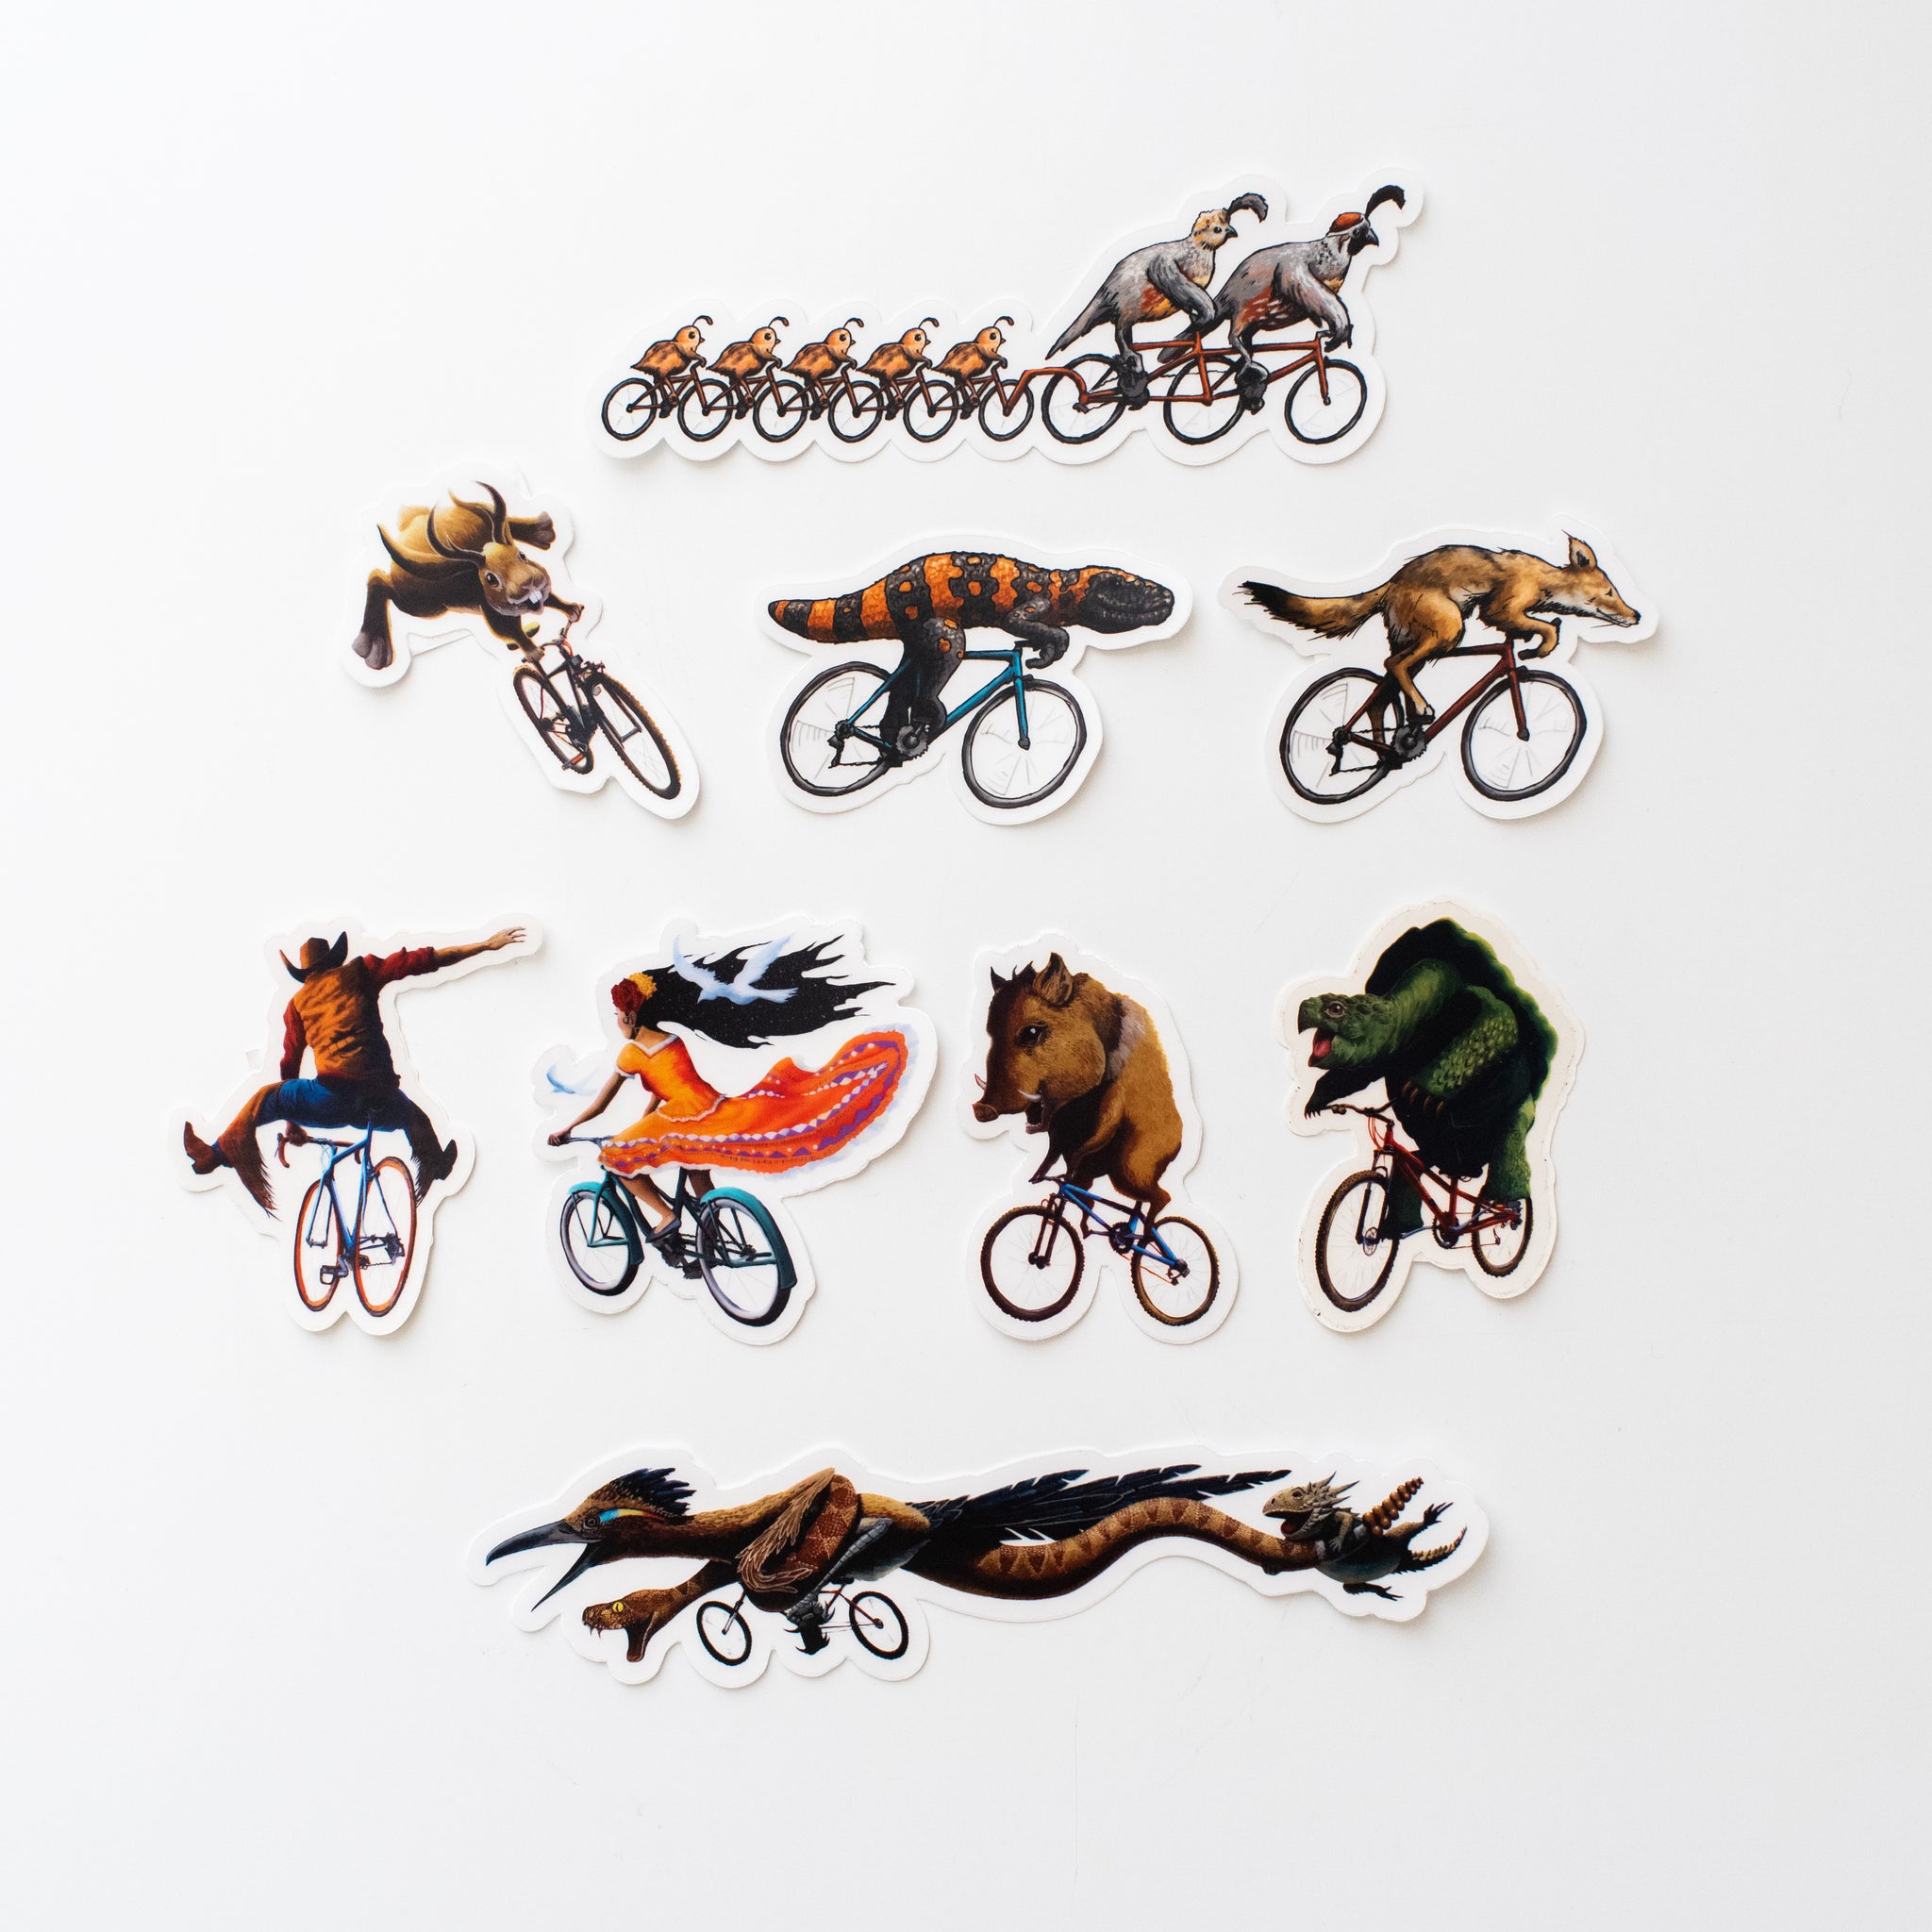 Bike Mural Stickers by Joe Pagac